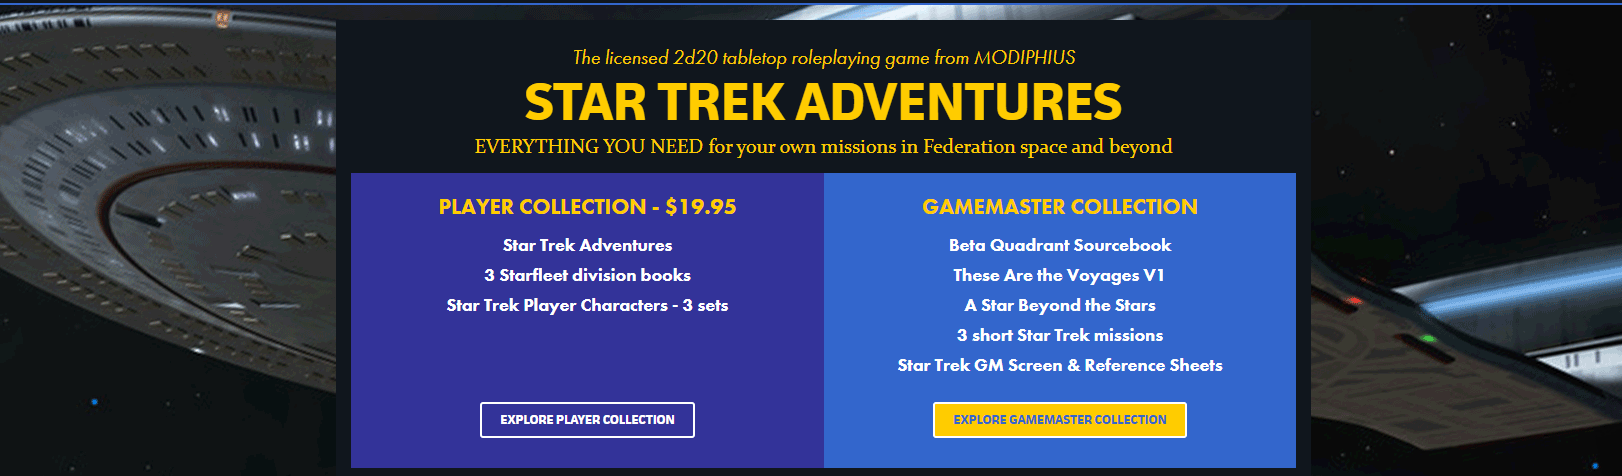 Star Trek Adventures bundle